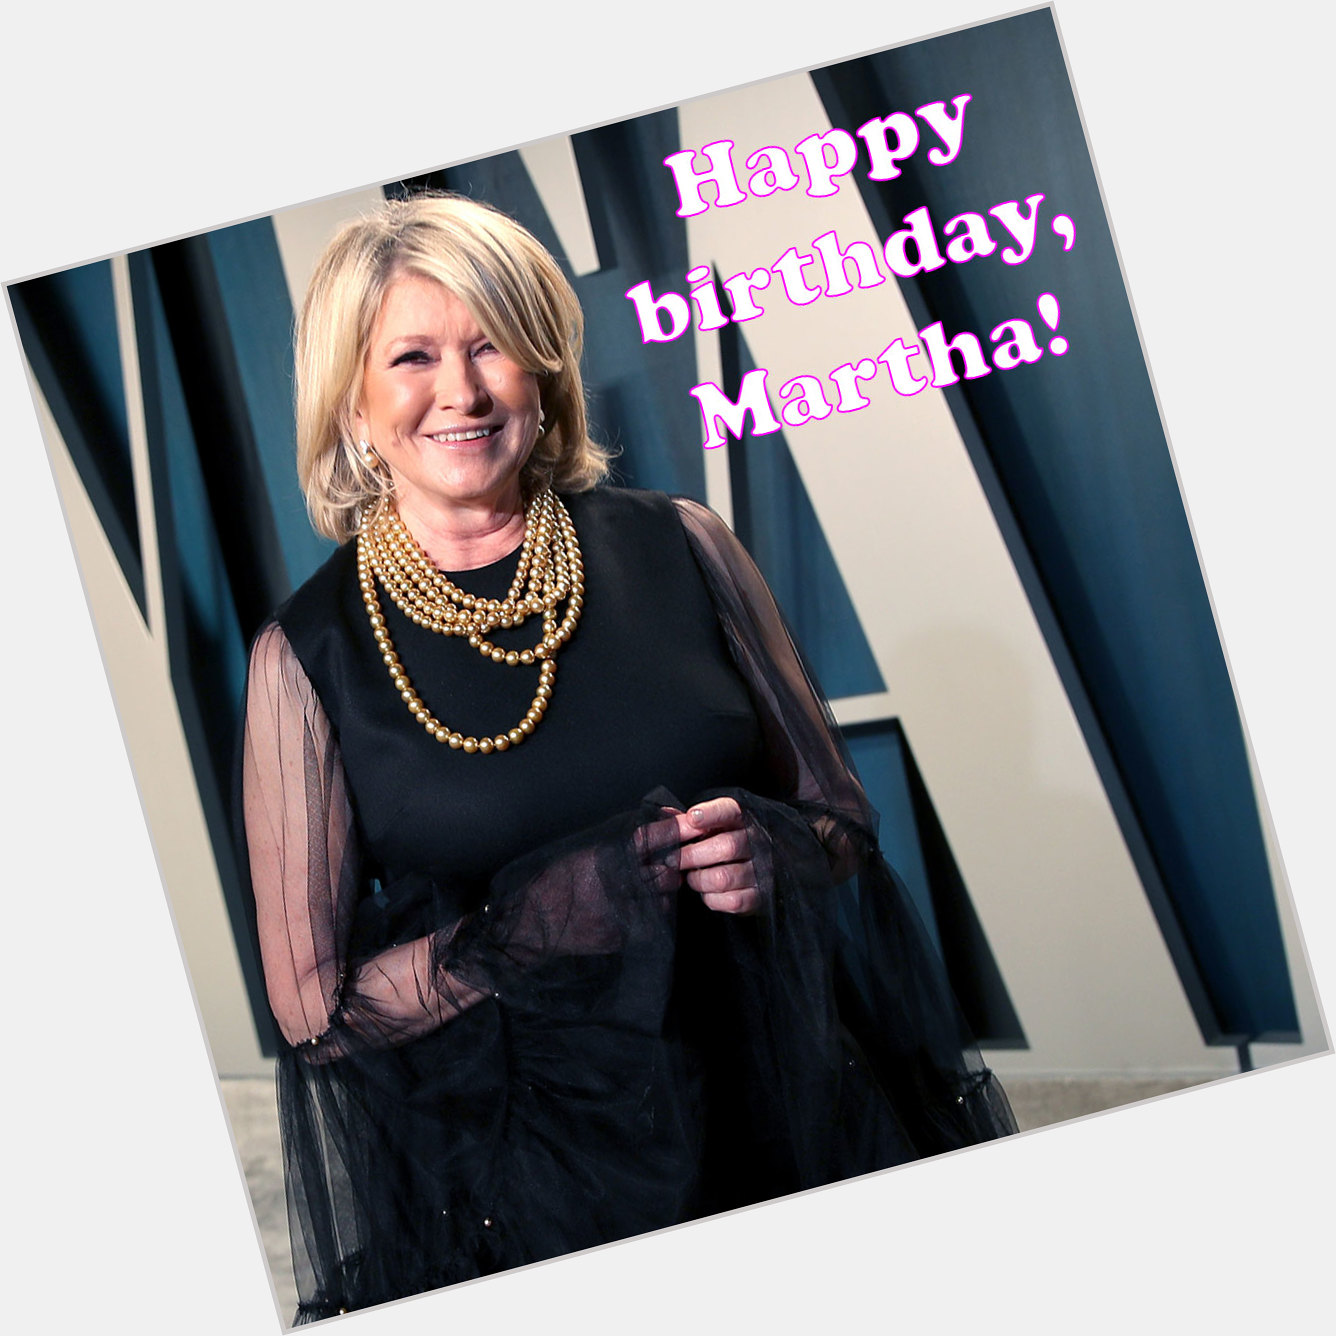 Happy birthday to Martha Stewart, who is 79 today! 